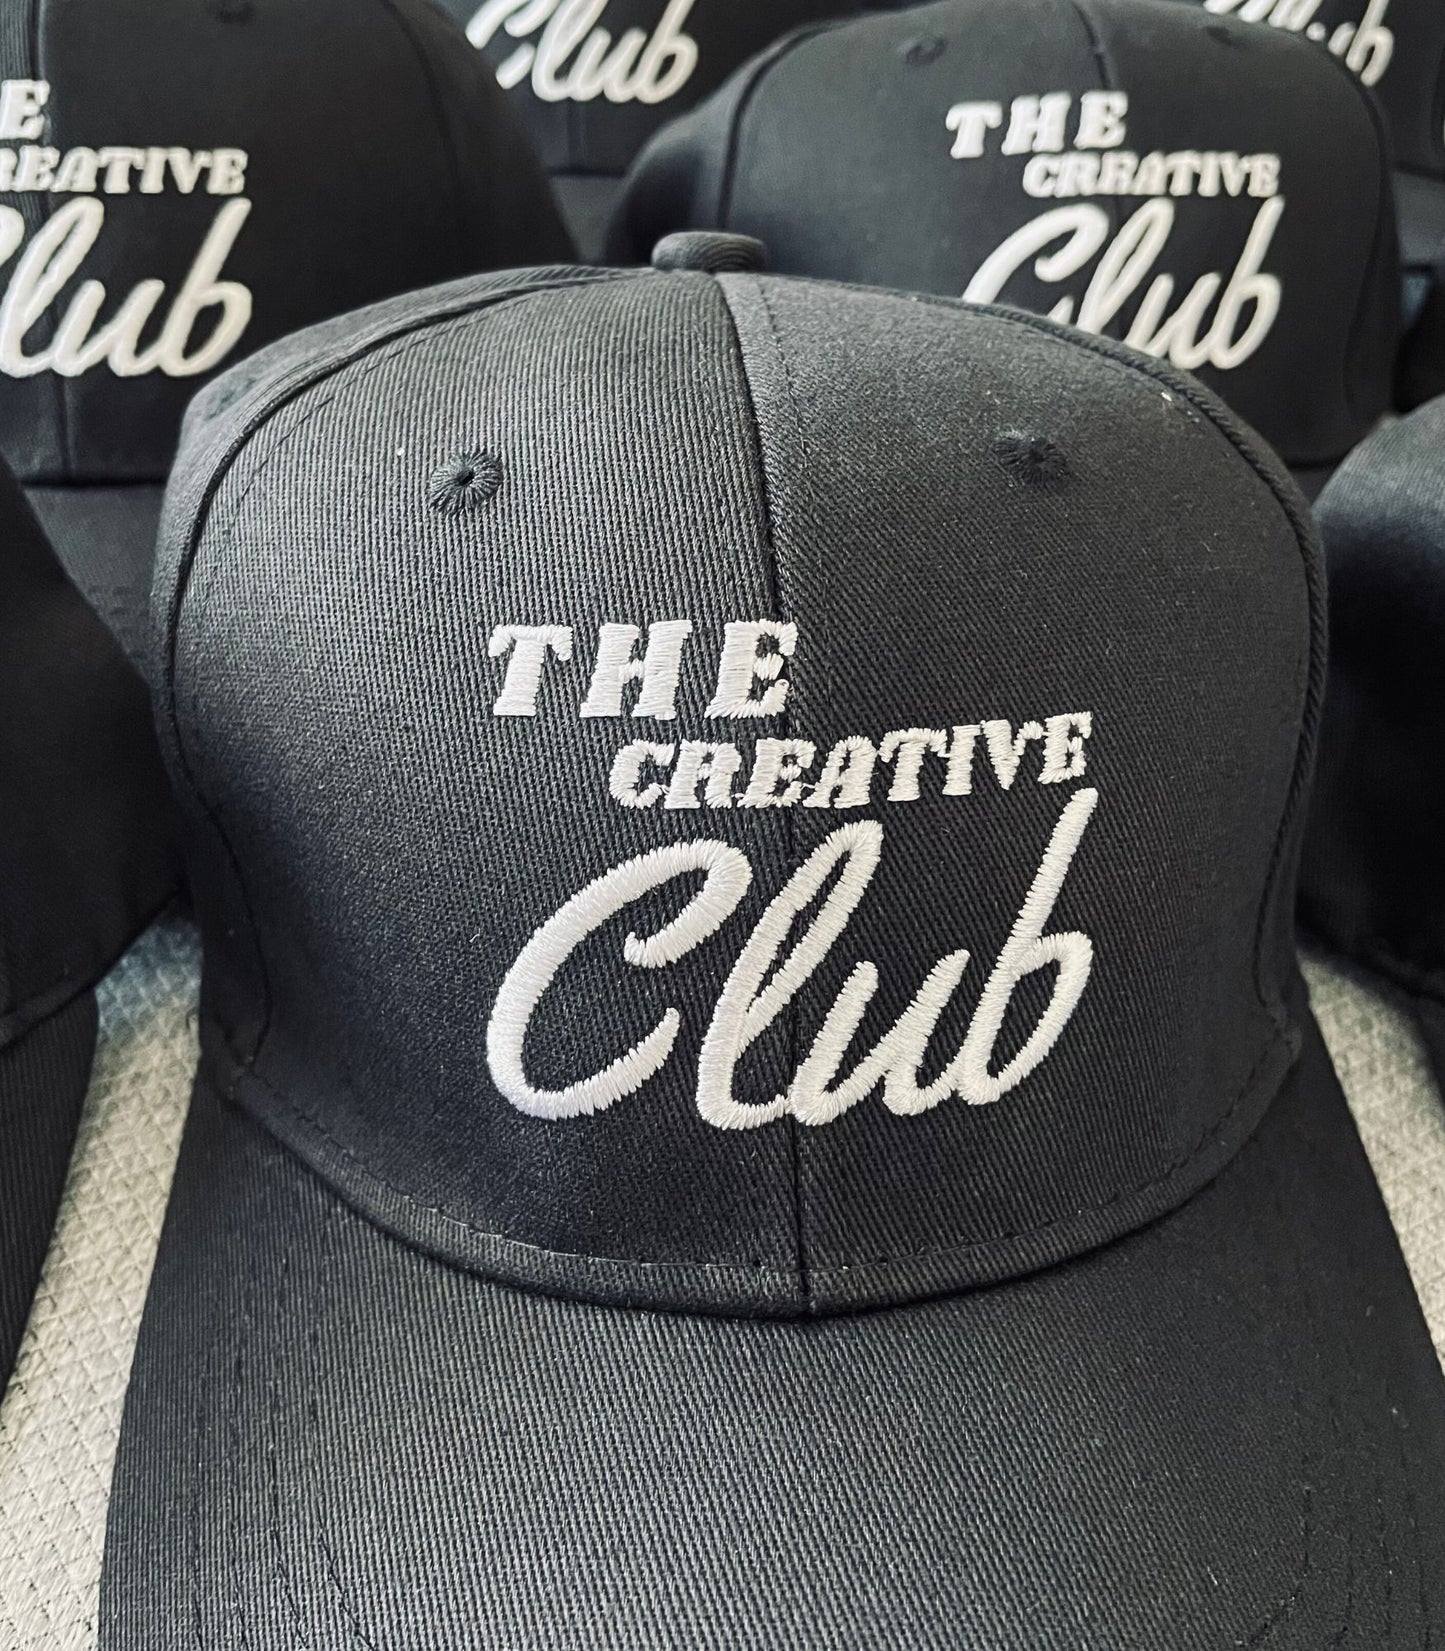 Black edition - "The Creative Club" Dad cap